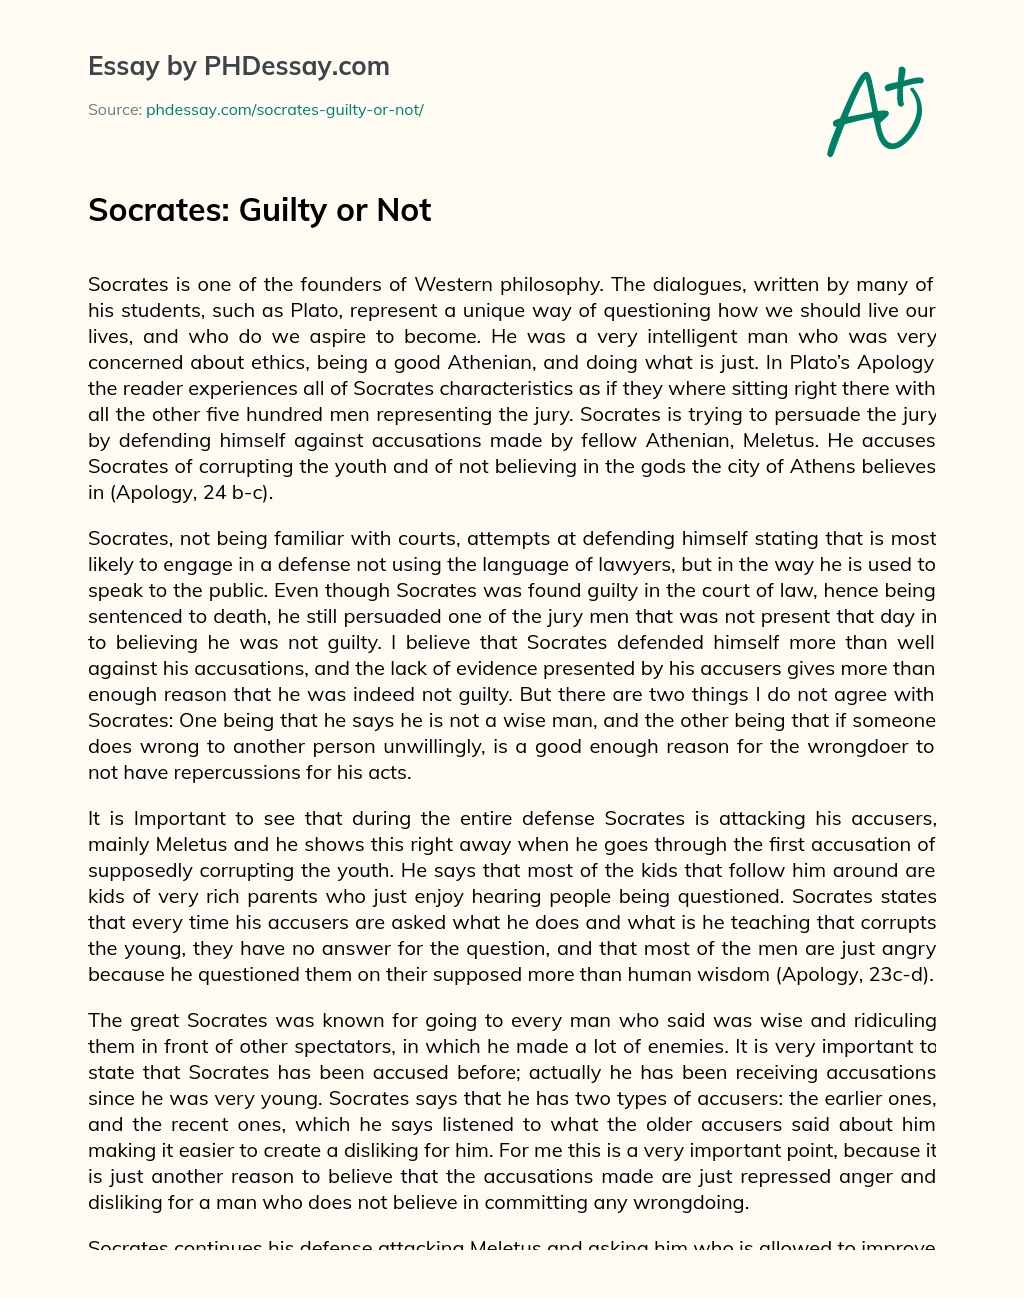 Socrates: Guilty or Not essay